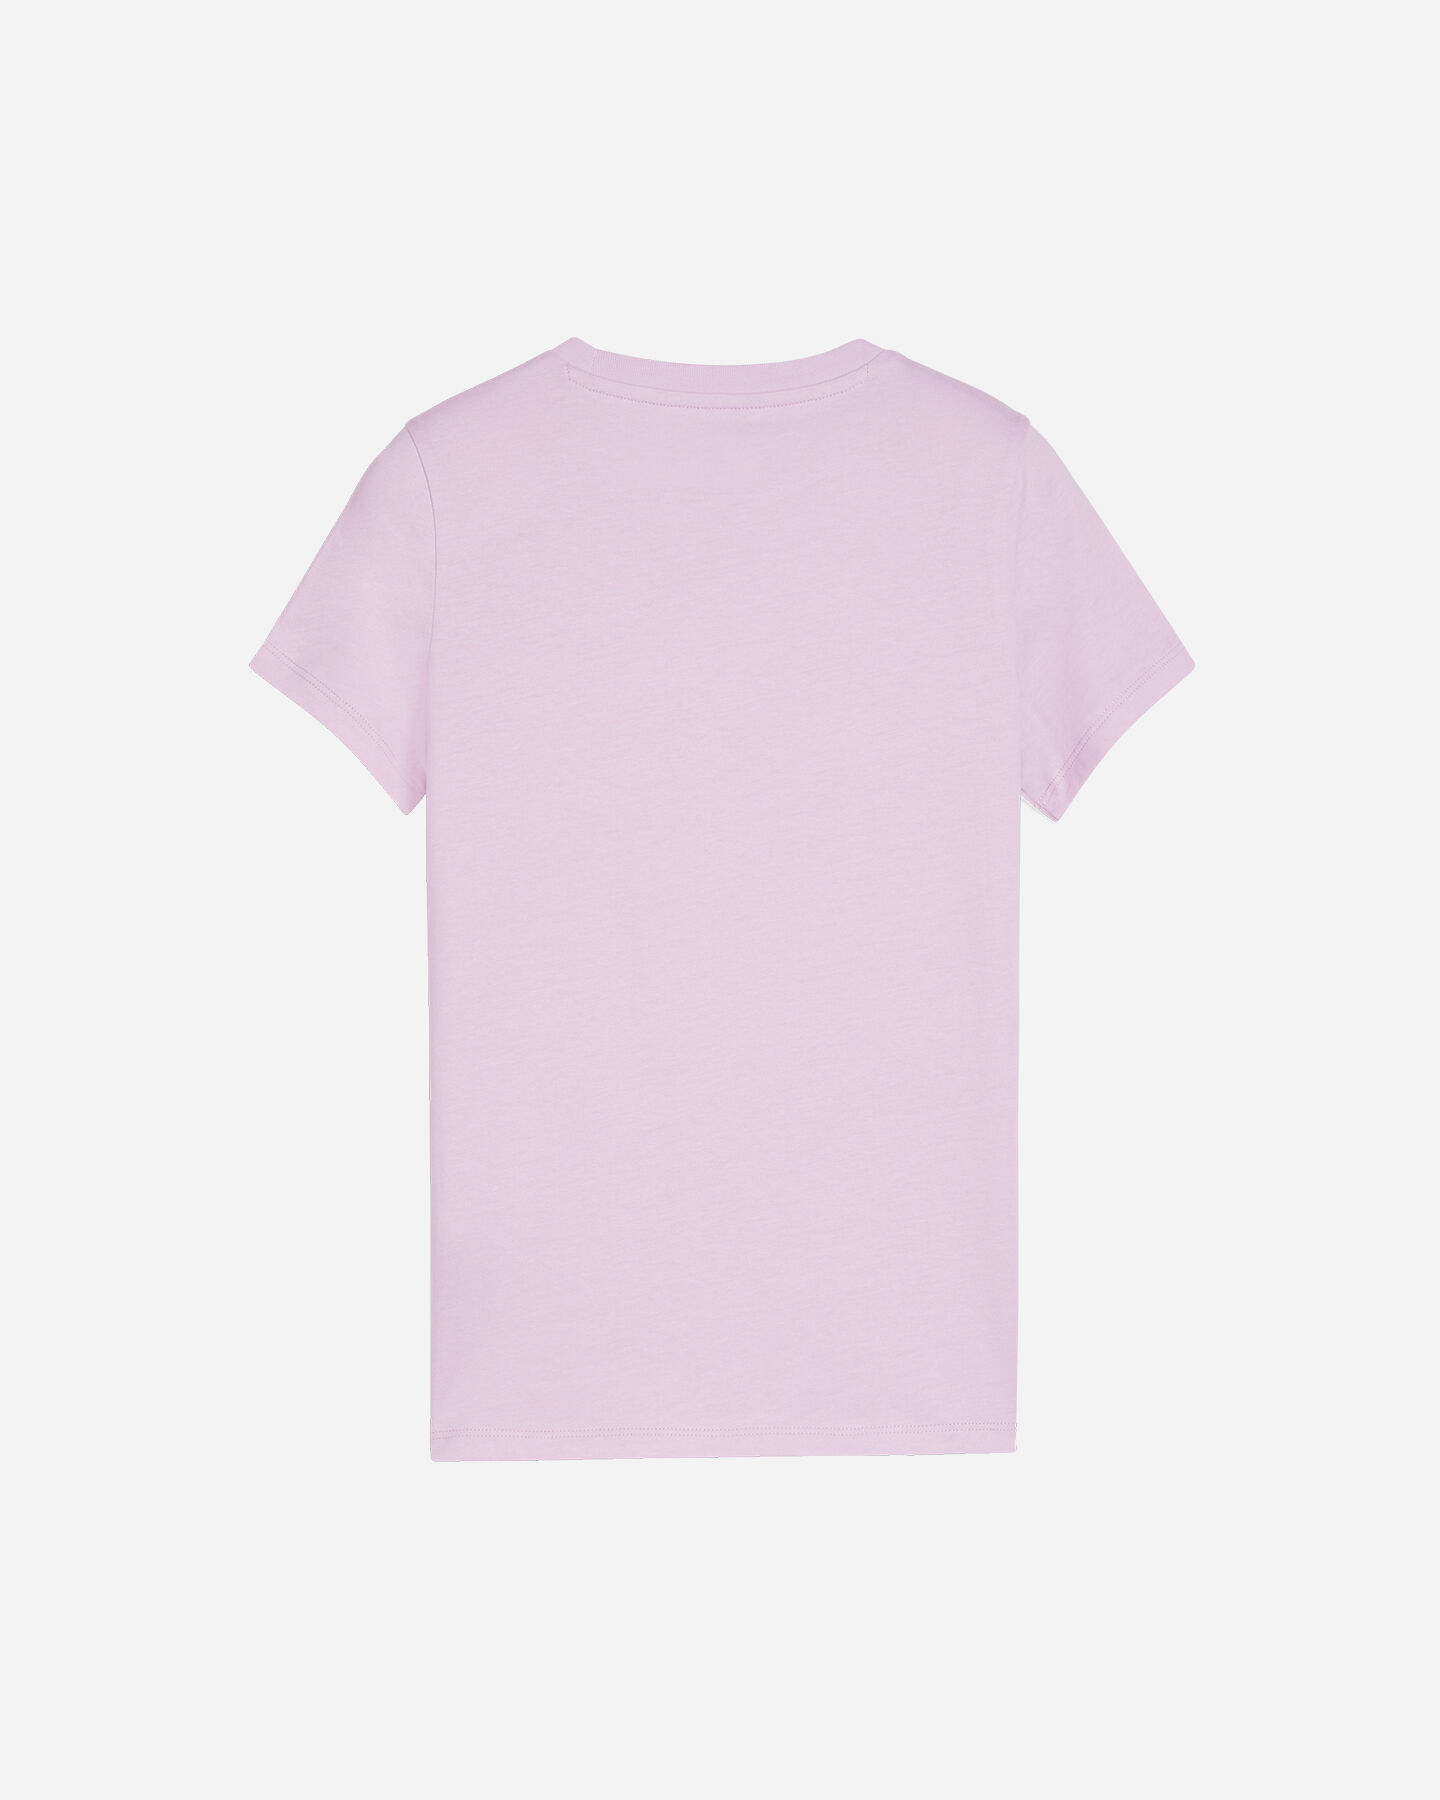  T-Shirt PUMA GIRL GRAPHIC JR S5662345|60|128 scatto 1